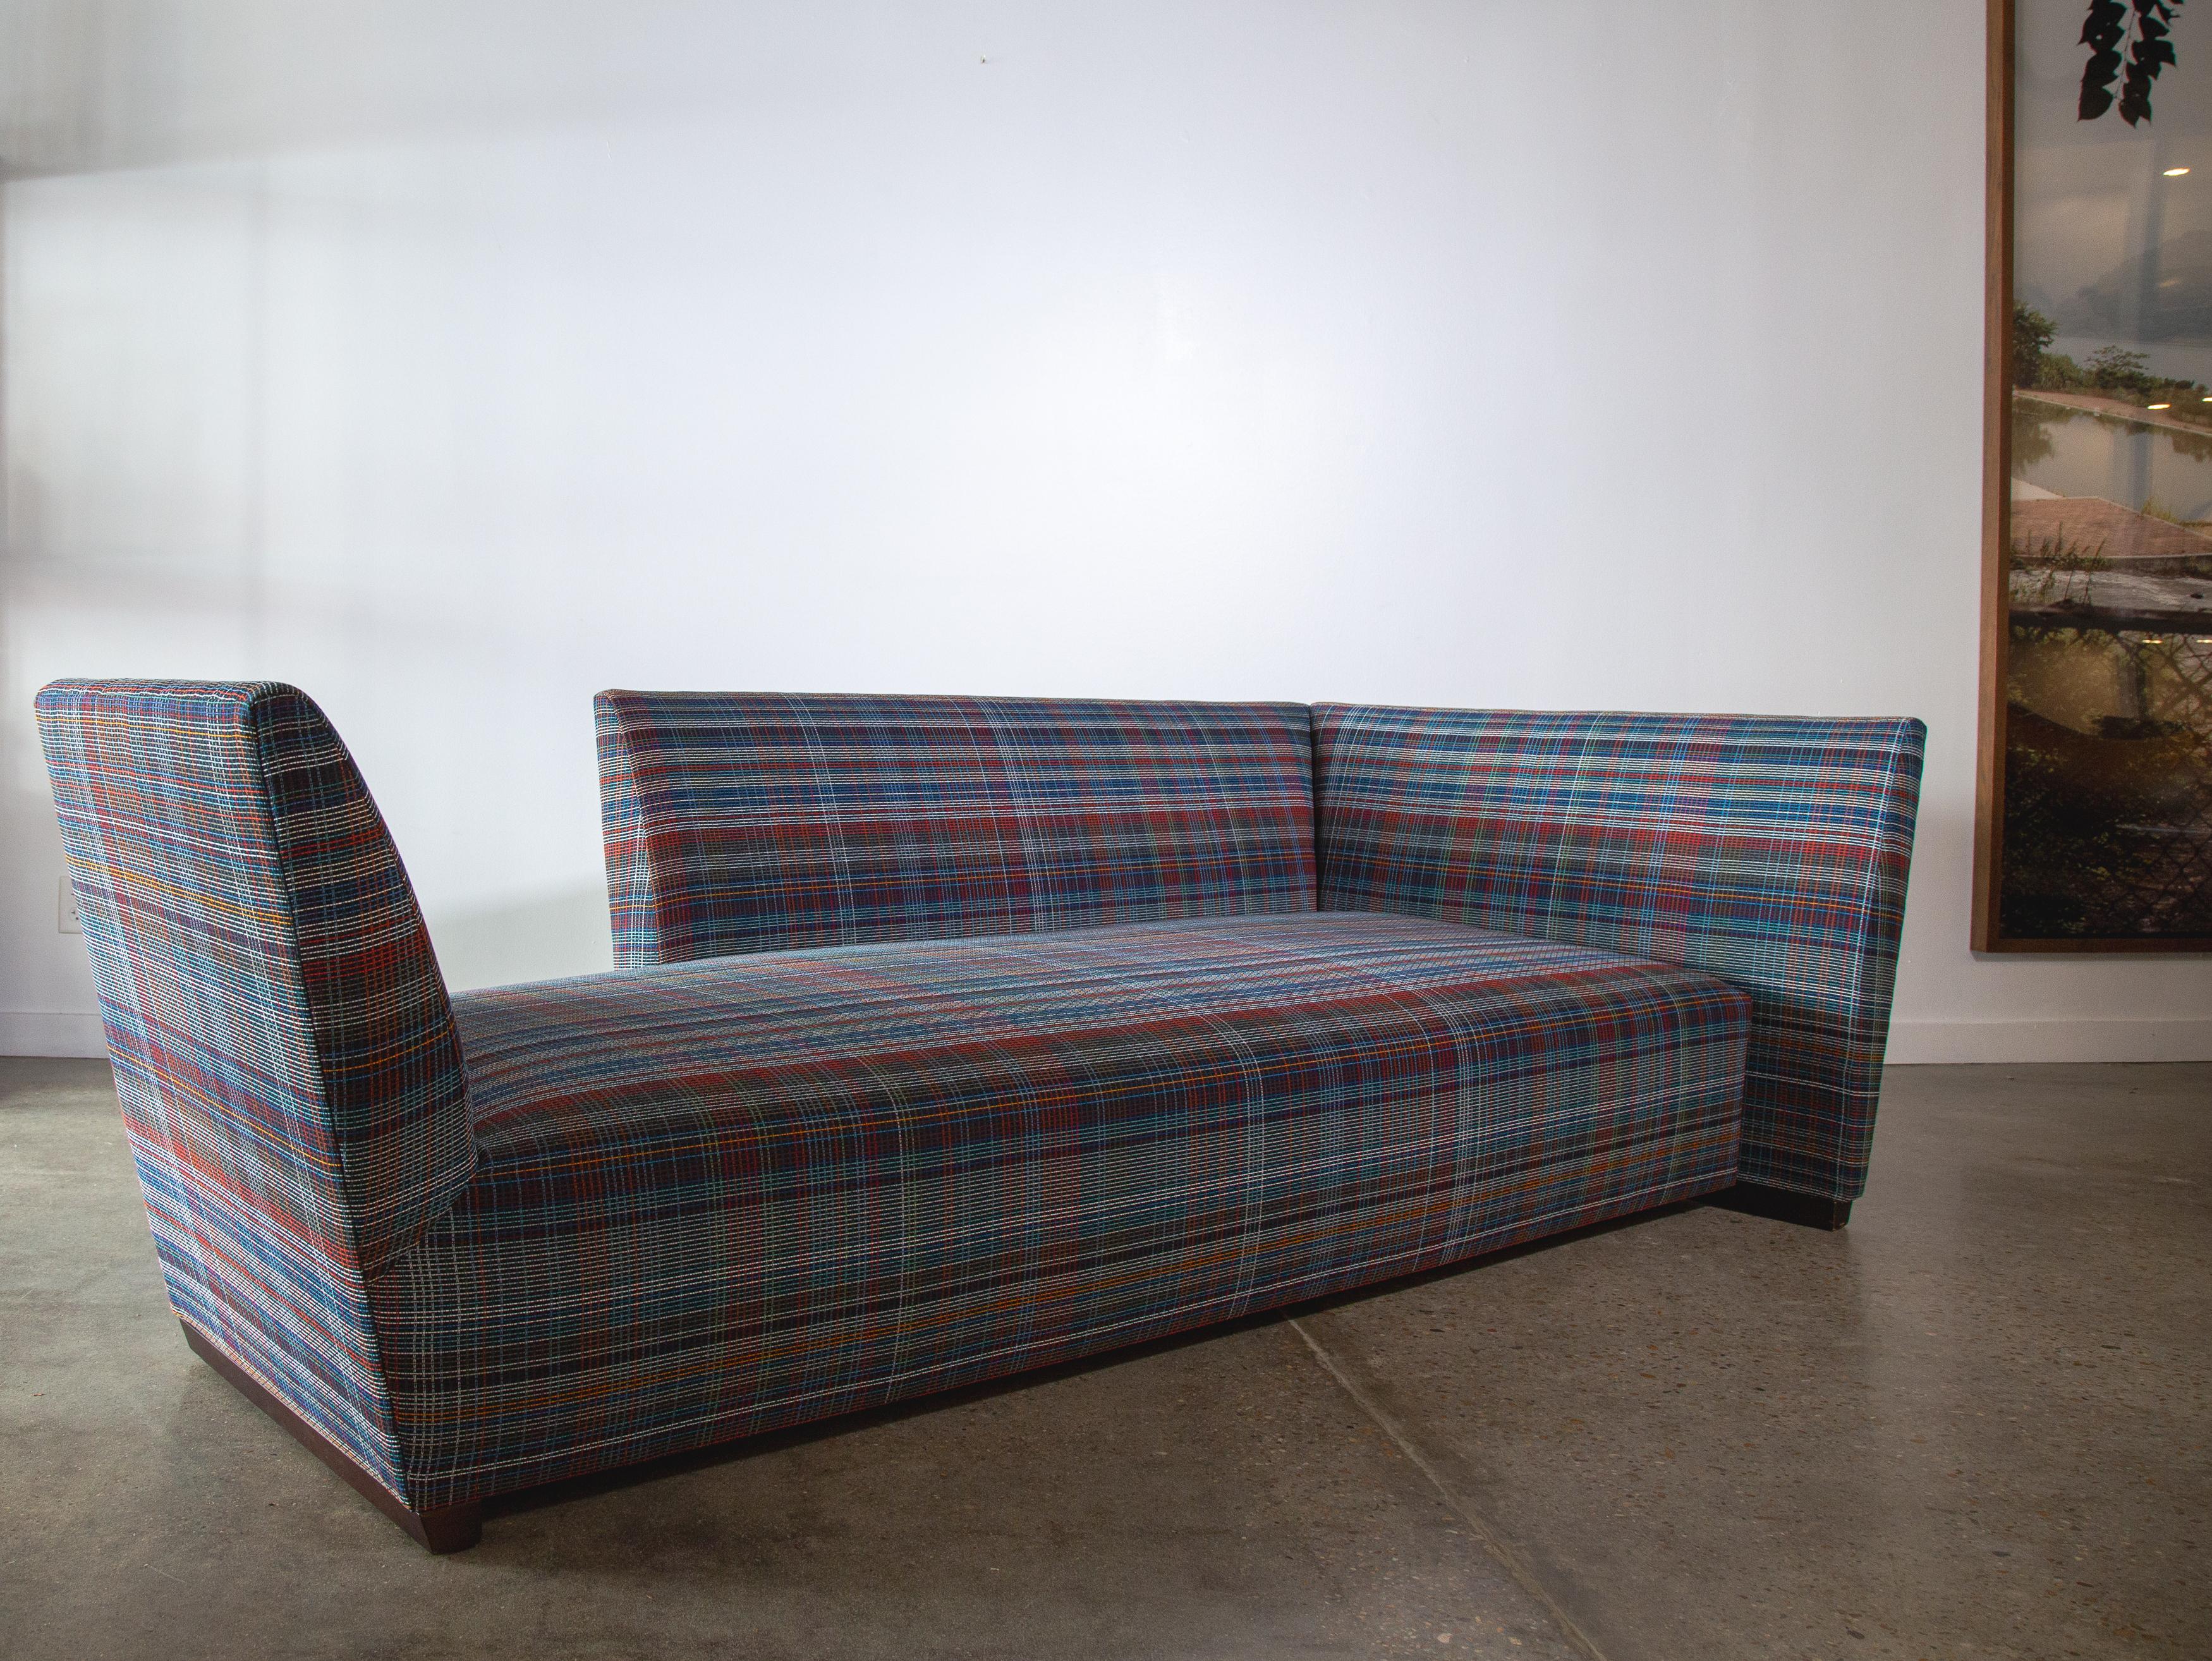 Contemporary Joe D'Urso Island Sofa for Donghia Knoll Plaidtastic Fabric tete-a-tete chaise For Sale